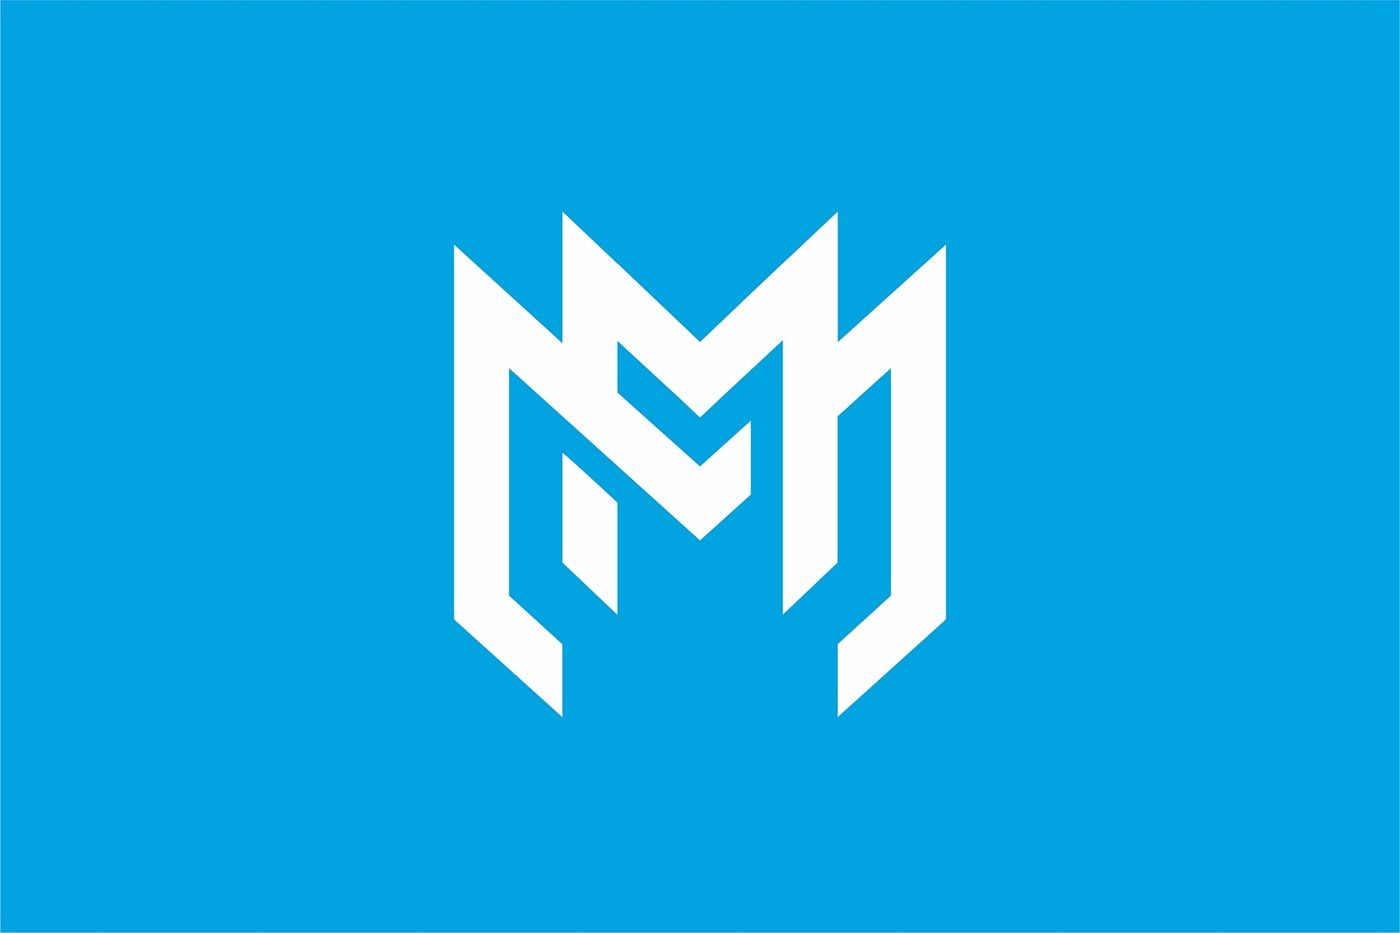 MM monogram logo template By buqancreative